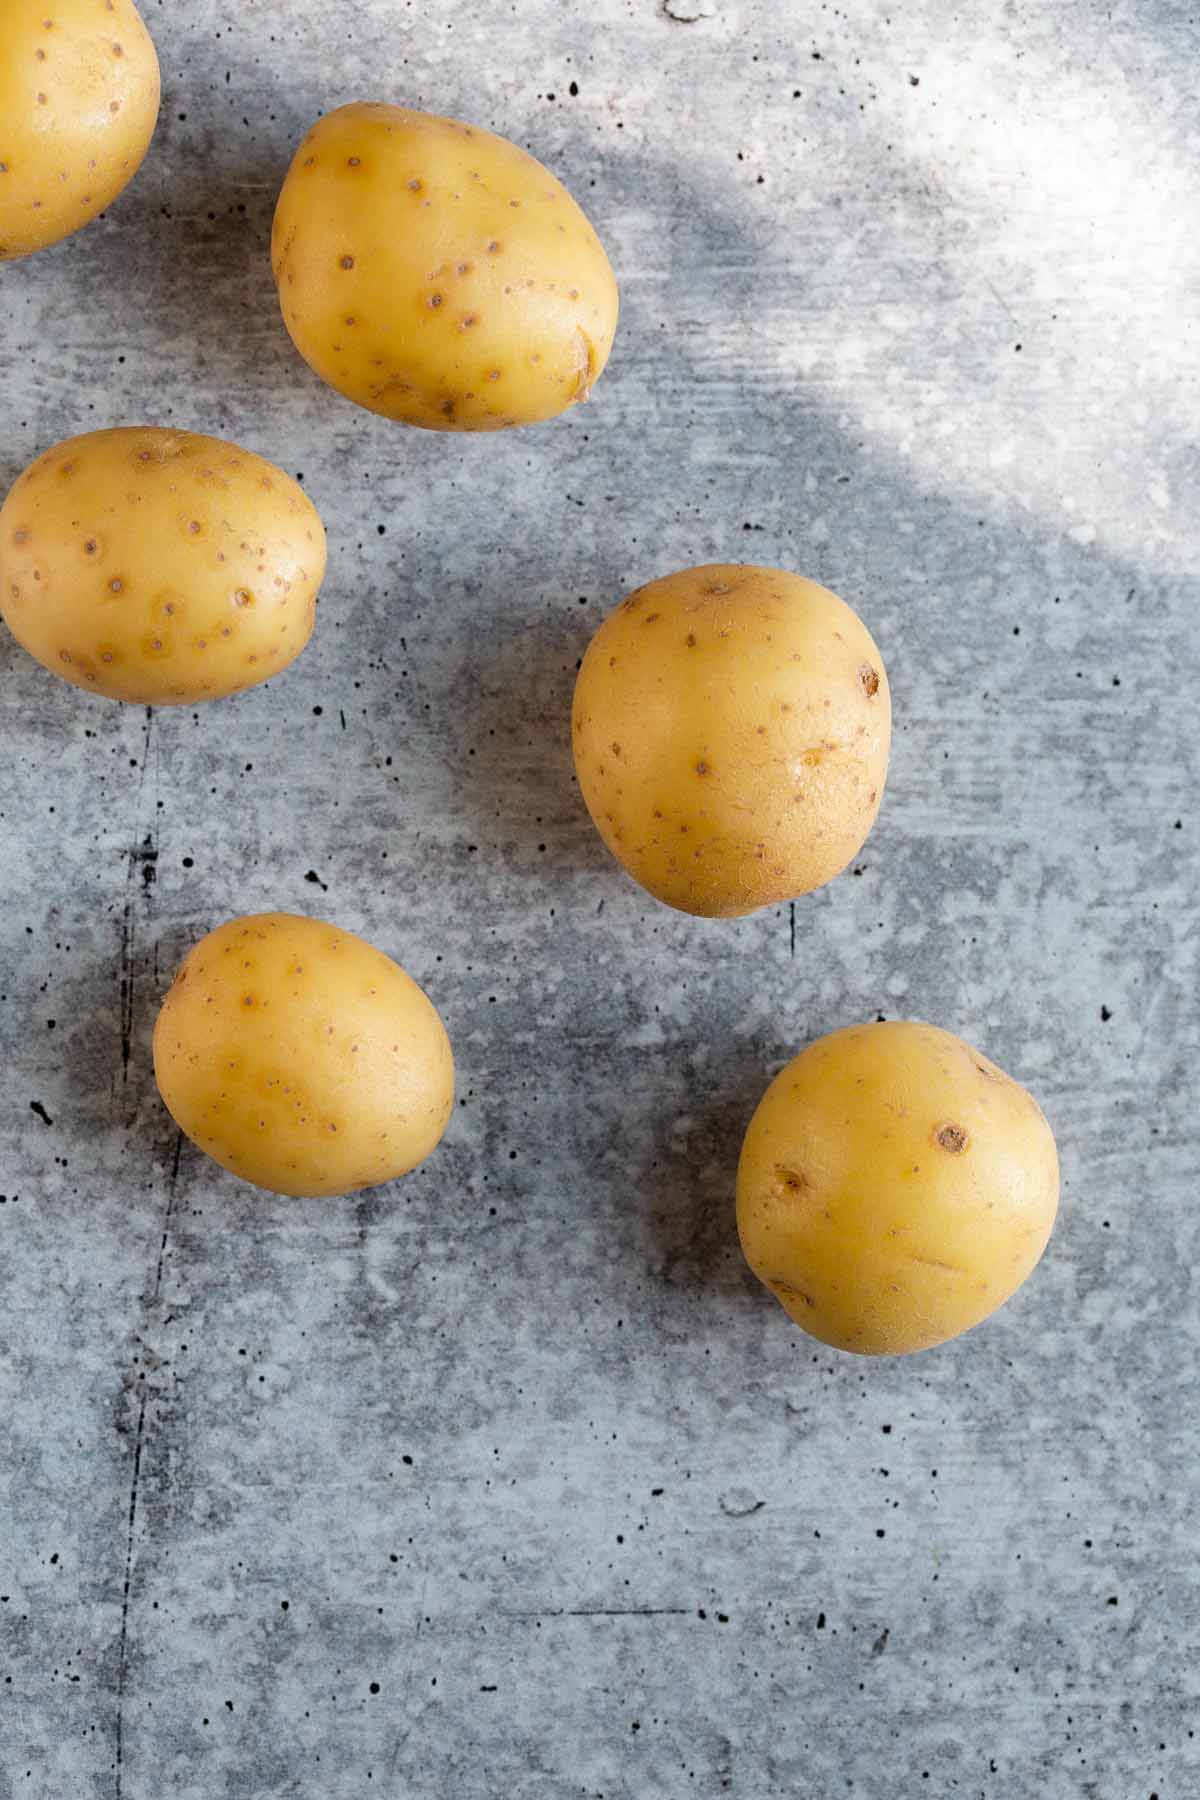 Small white potatoes